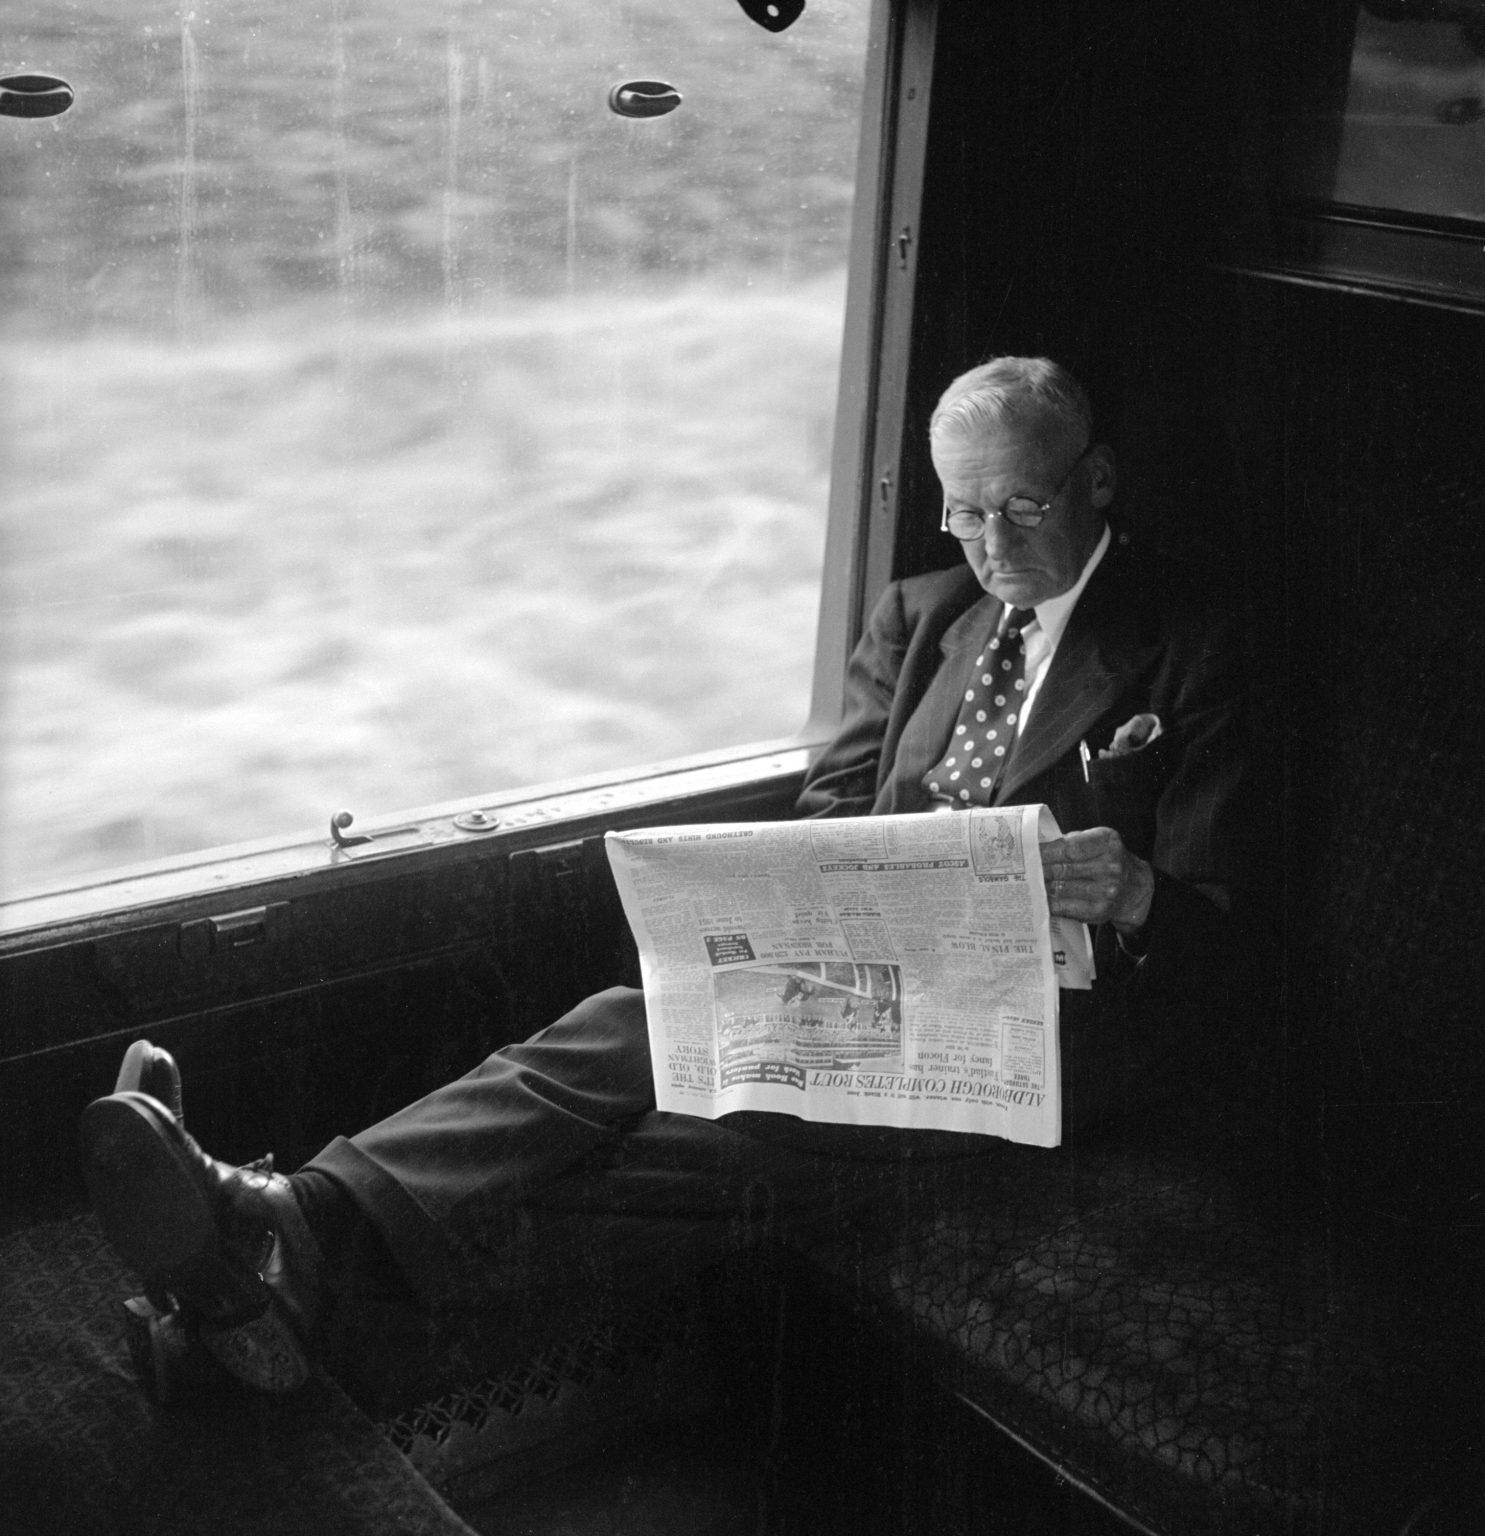 Man on train, National Railway Museum blog